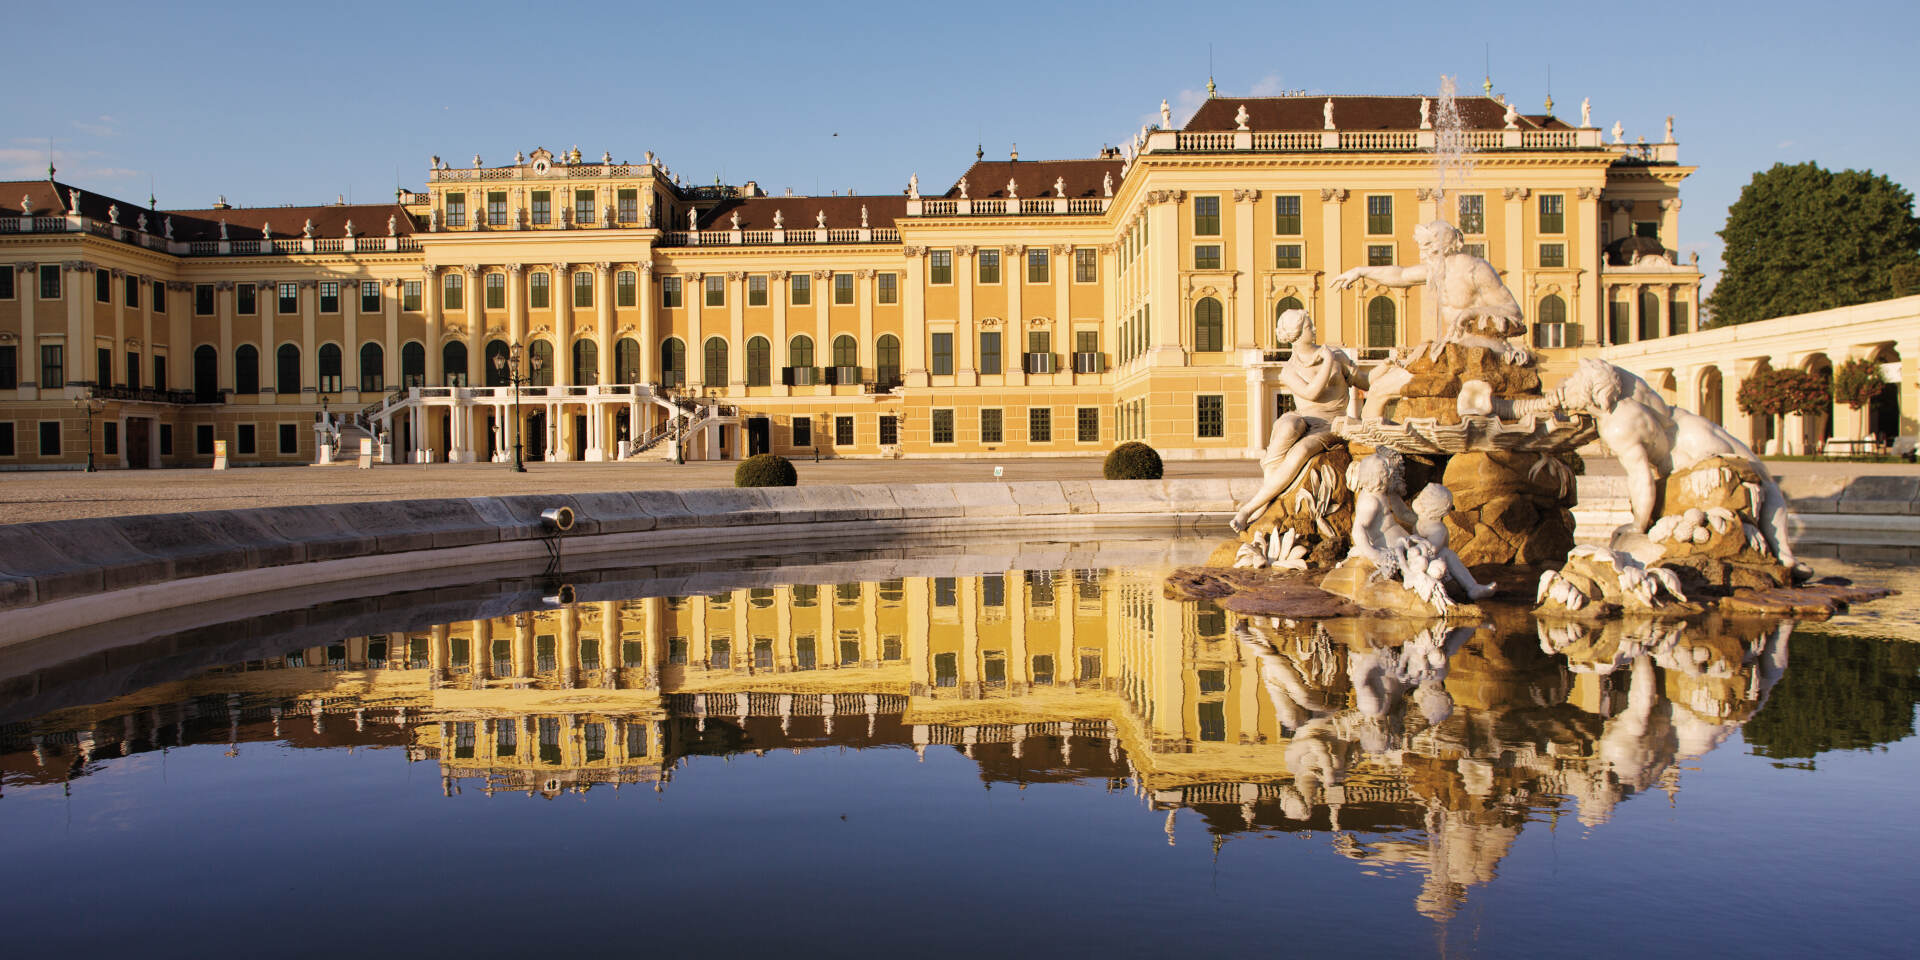 Vienna - Schönbrunn Palace © WienTourismus | Peter Rigaud